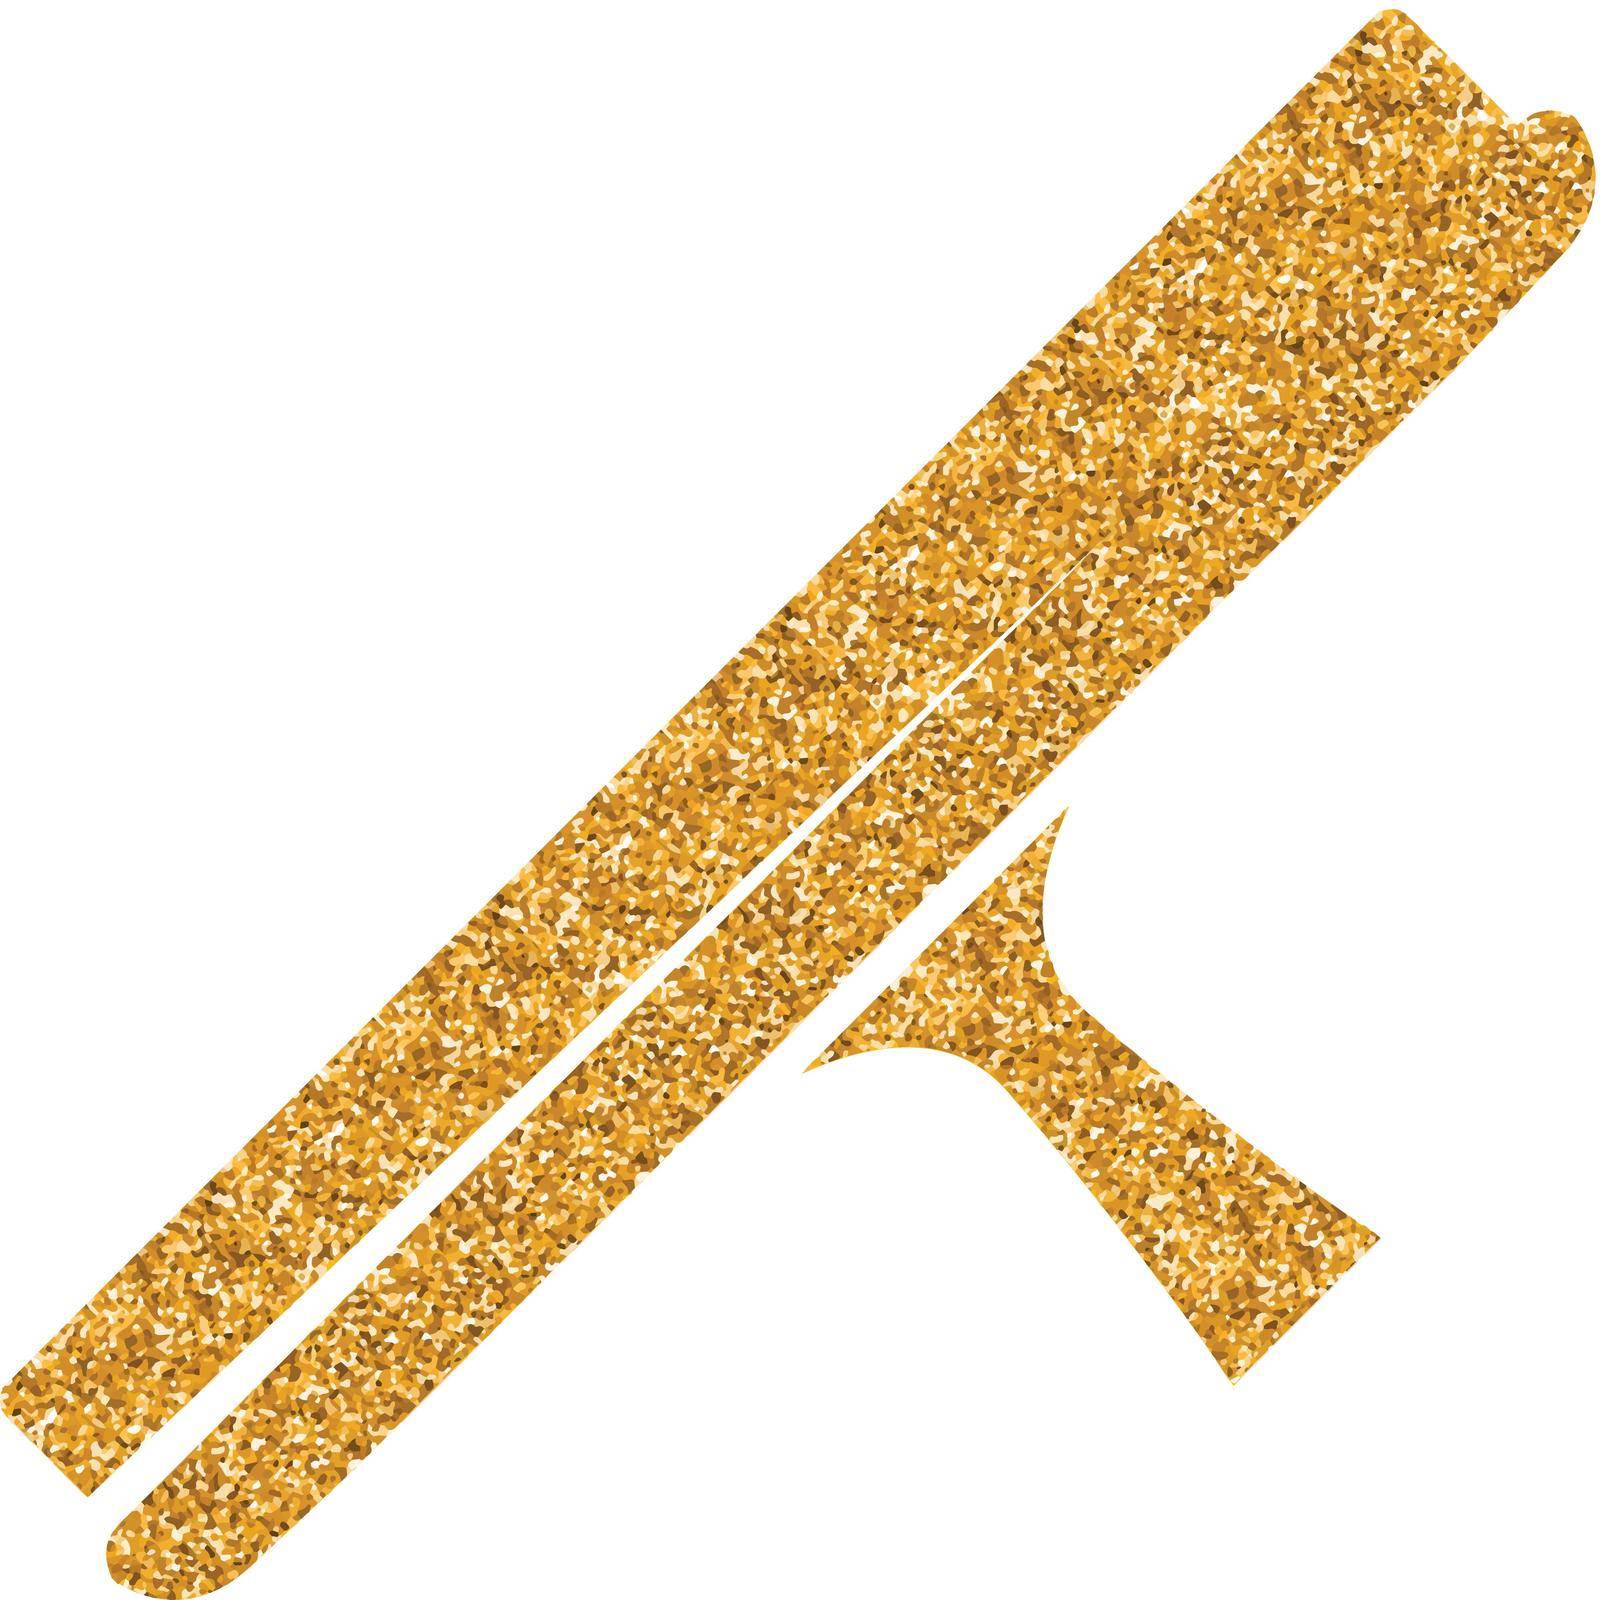 Glass scraper icon in gold glitter texture. Sparkle luxury style vector illustration.